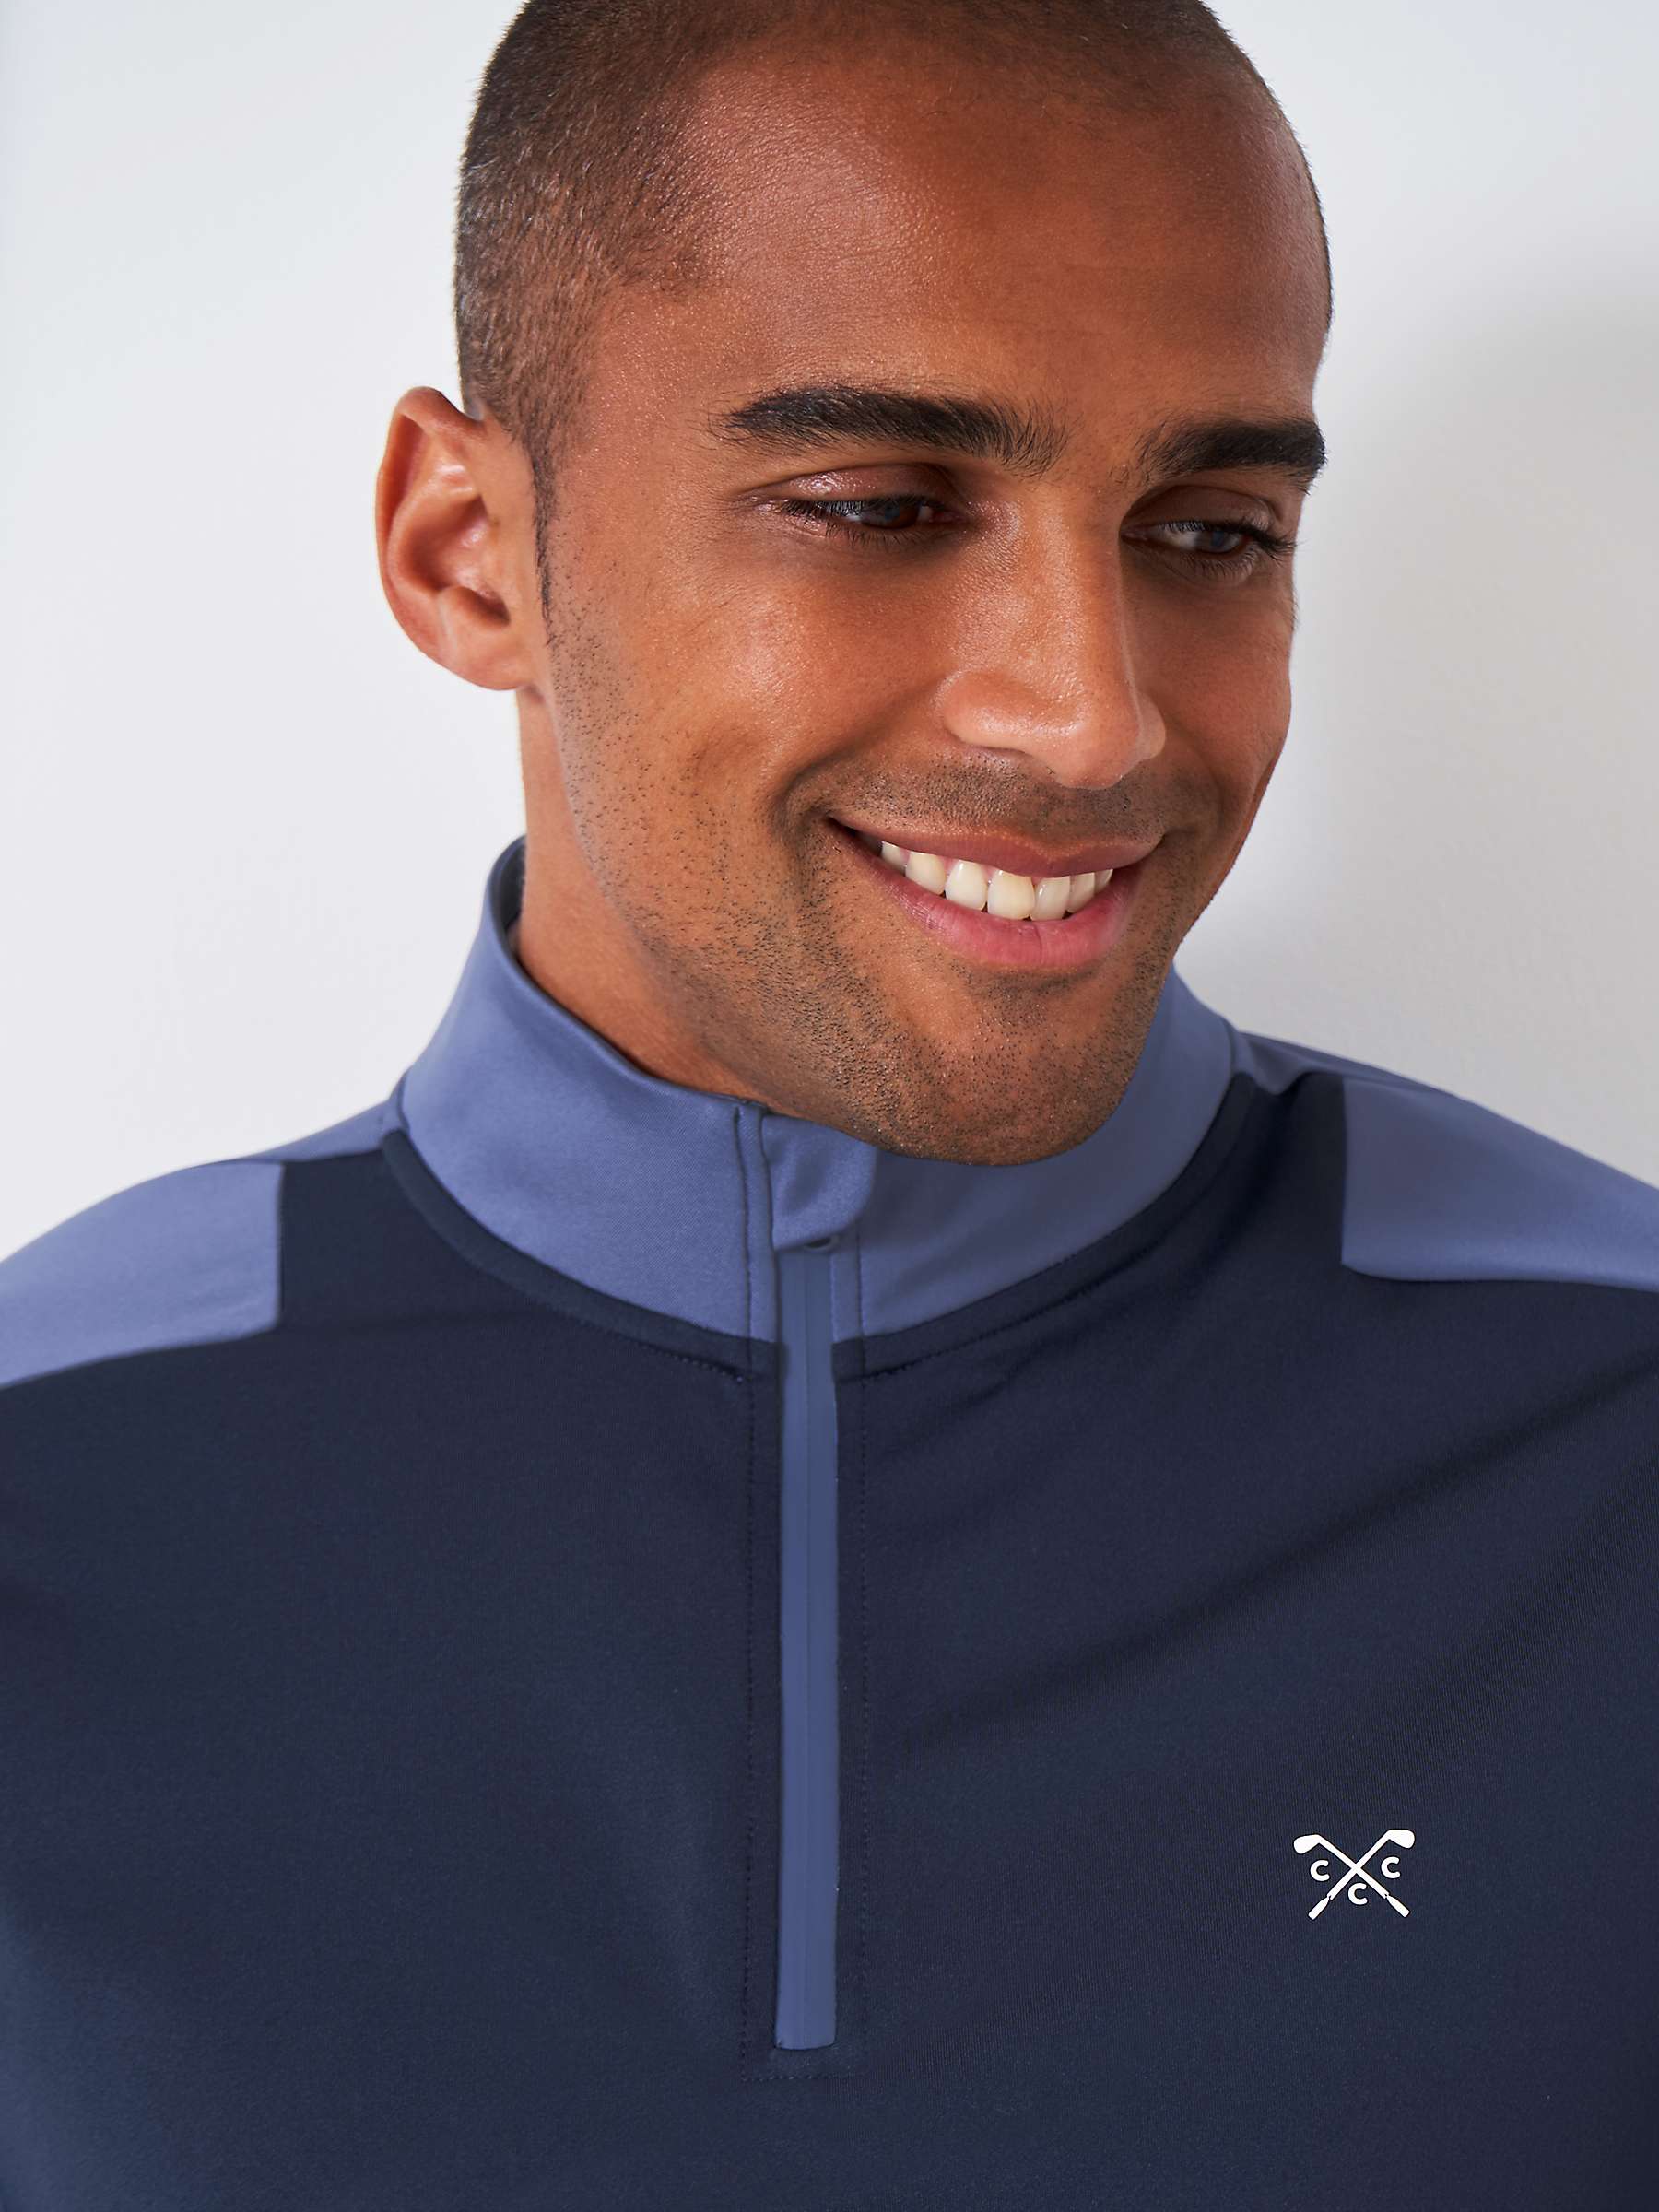 Buy Crew Clothing Champion Half Zip Golf Sweatshirt, Mid Blue Online at johnlewis.com